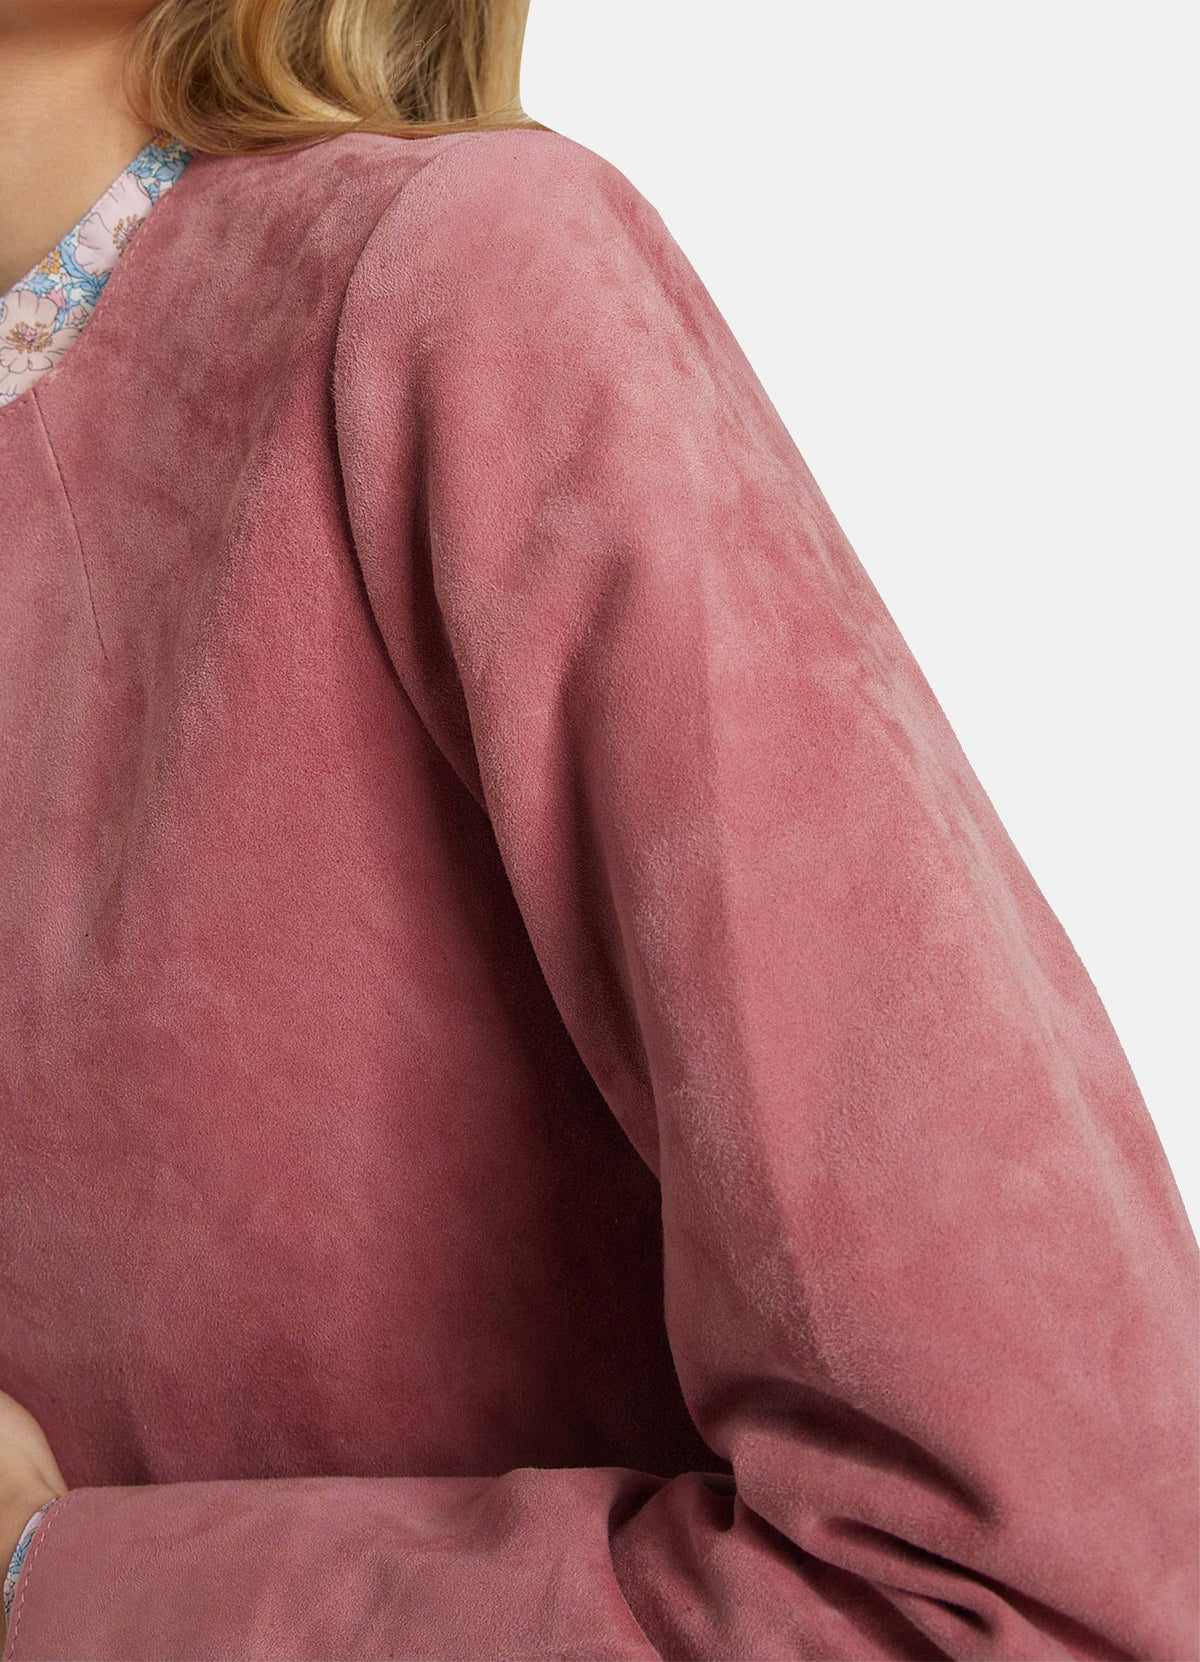 Womens Vintage Pink Suede Leather Jacket